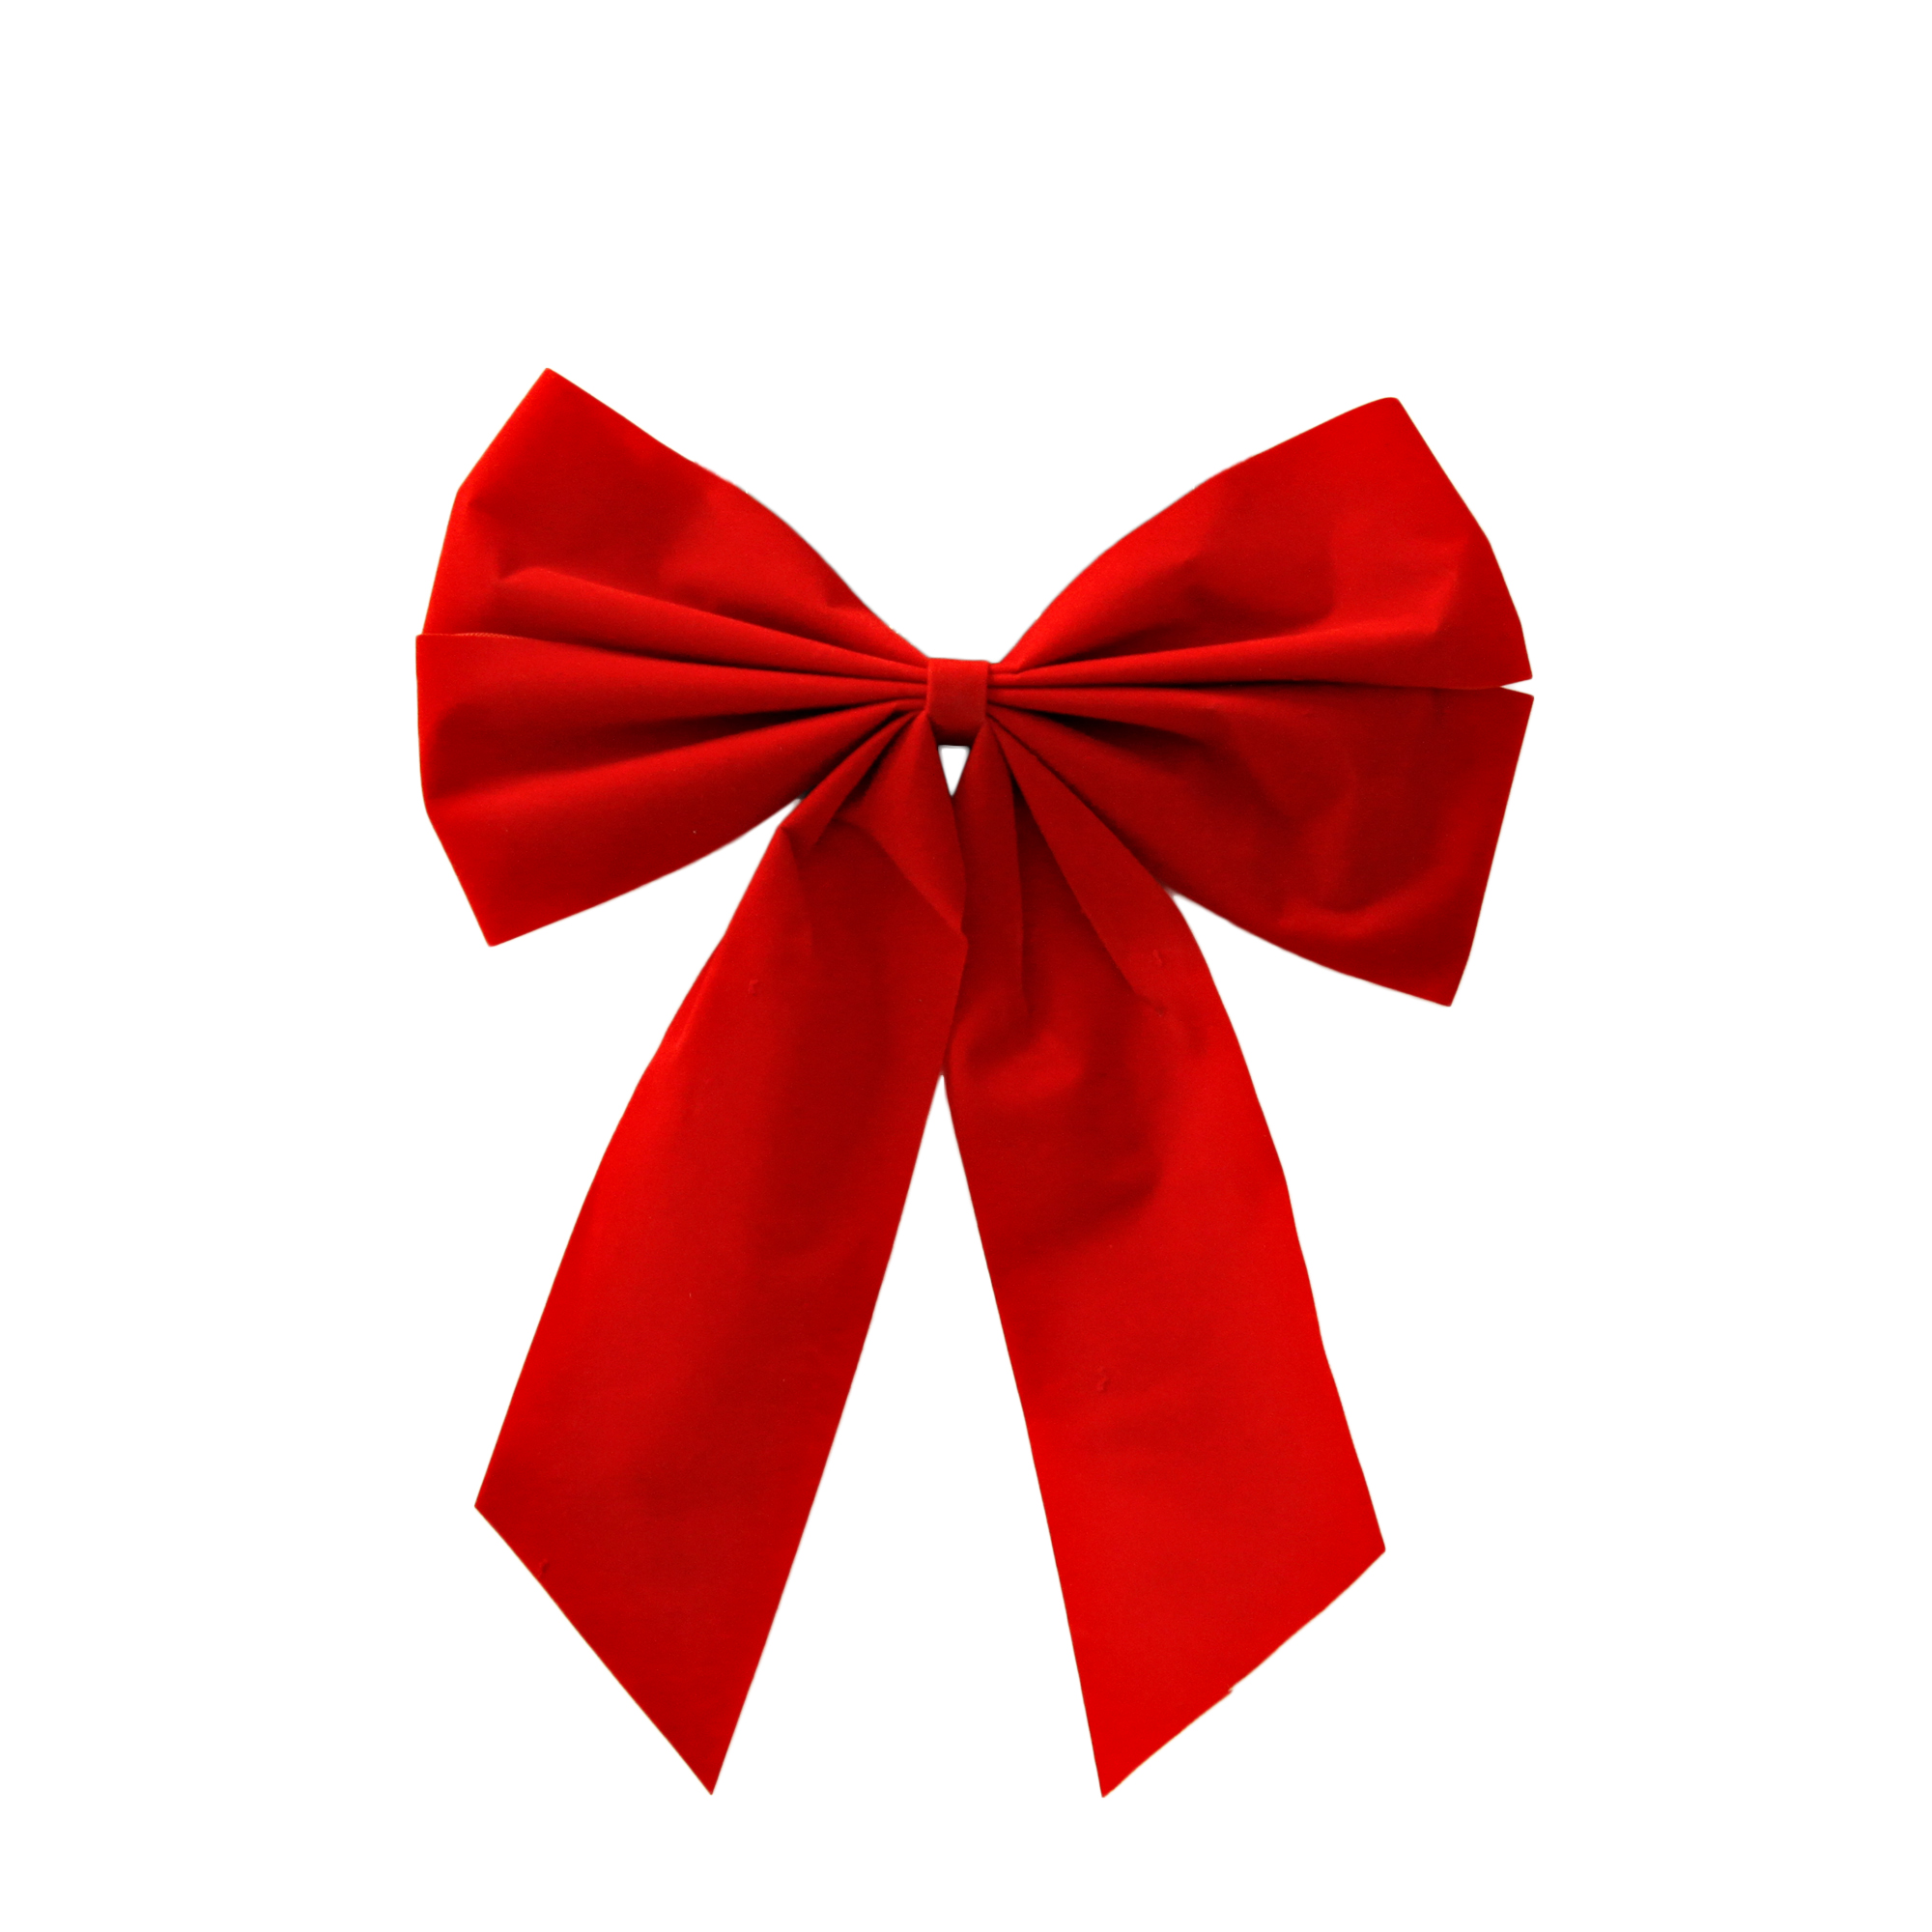 Trim A Home® 11x16 Red Basic Bow - Seasonal - Christmas - Tree Ornamentation